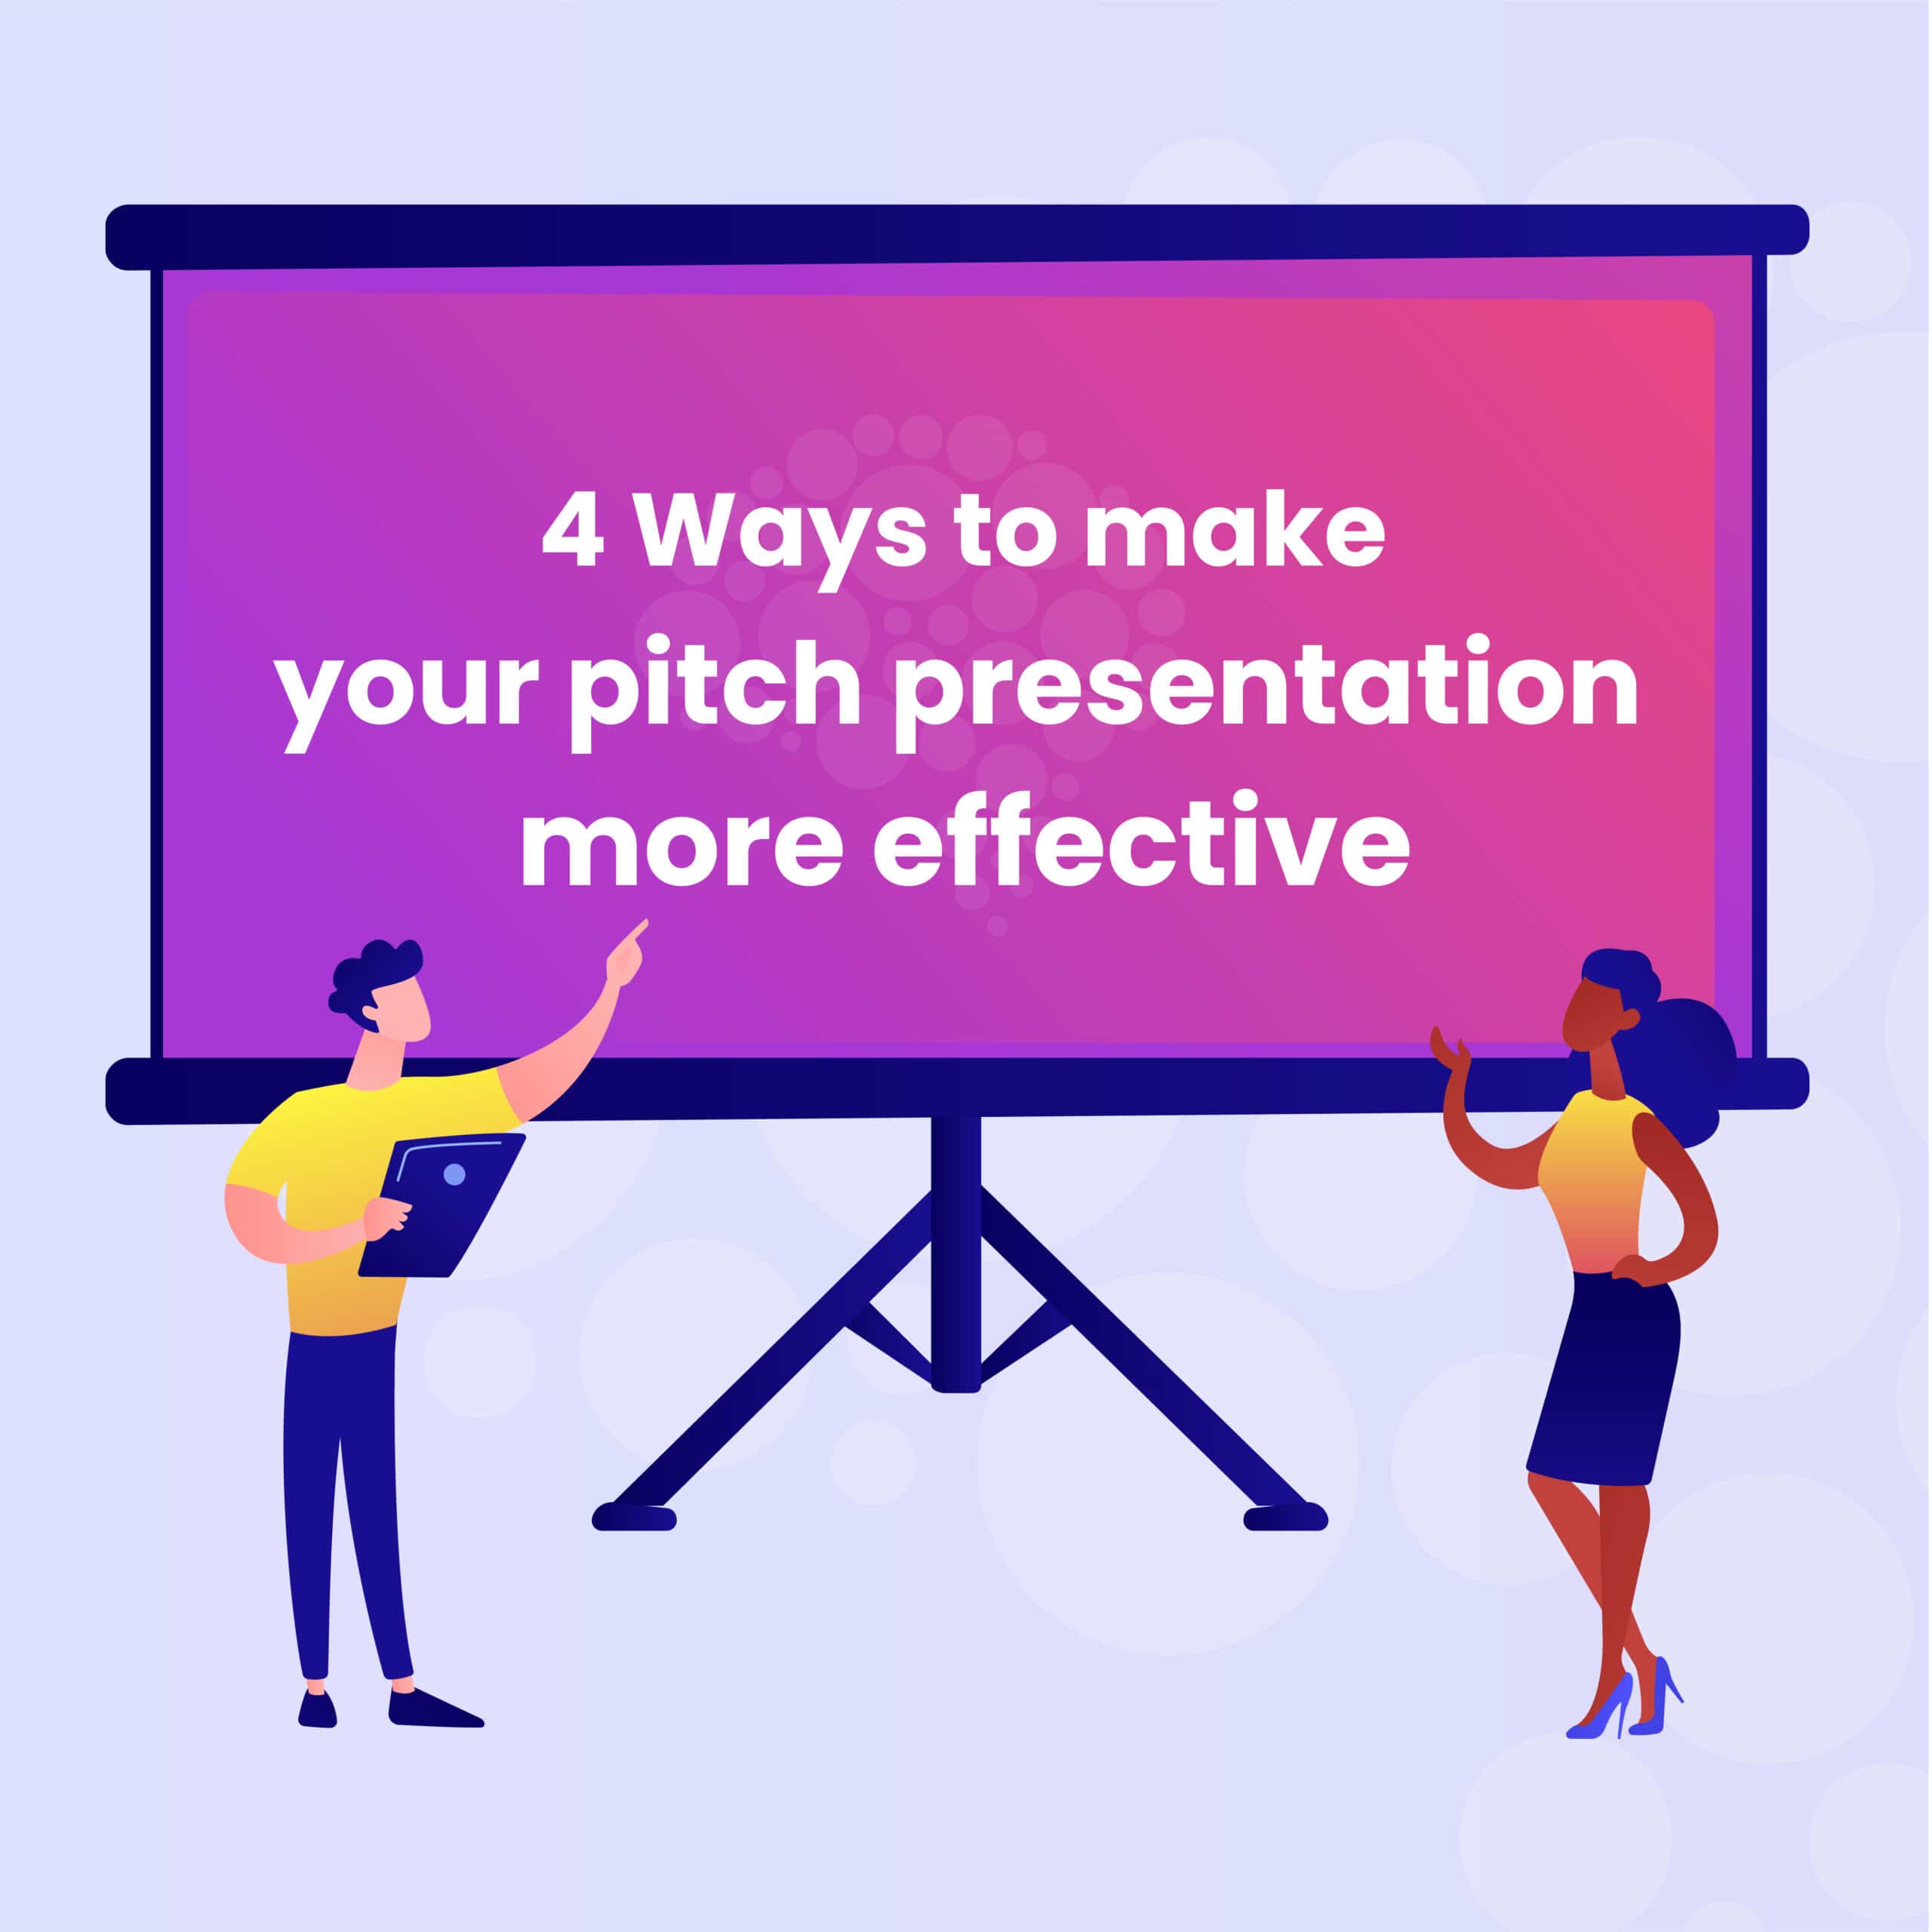 whats a pitch presentation